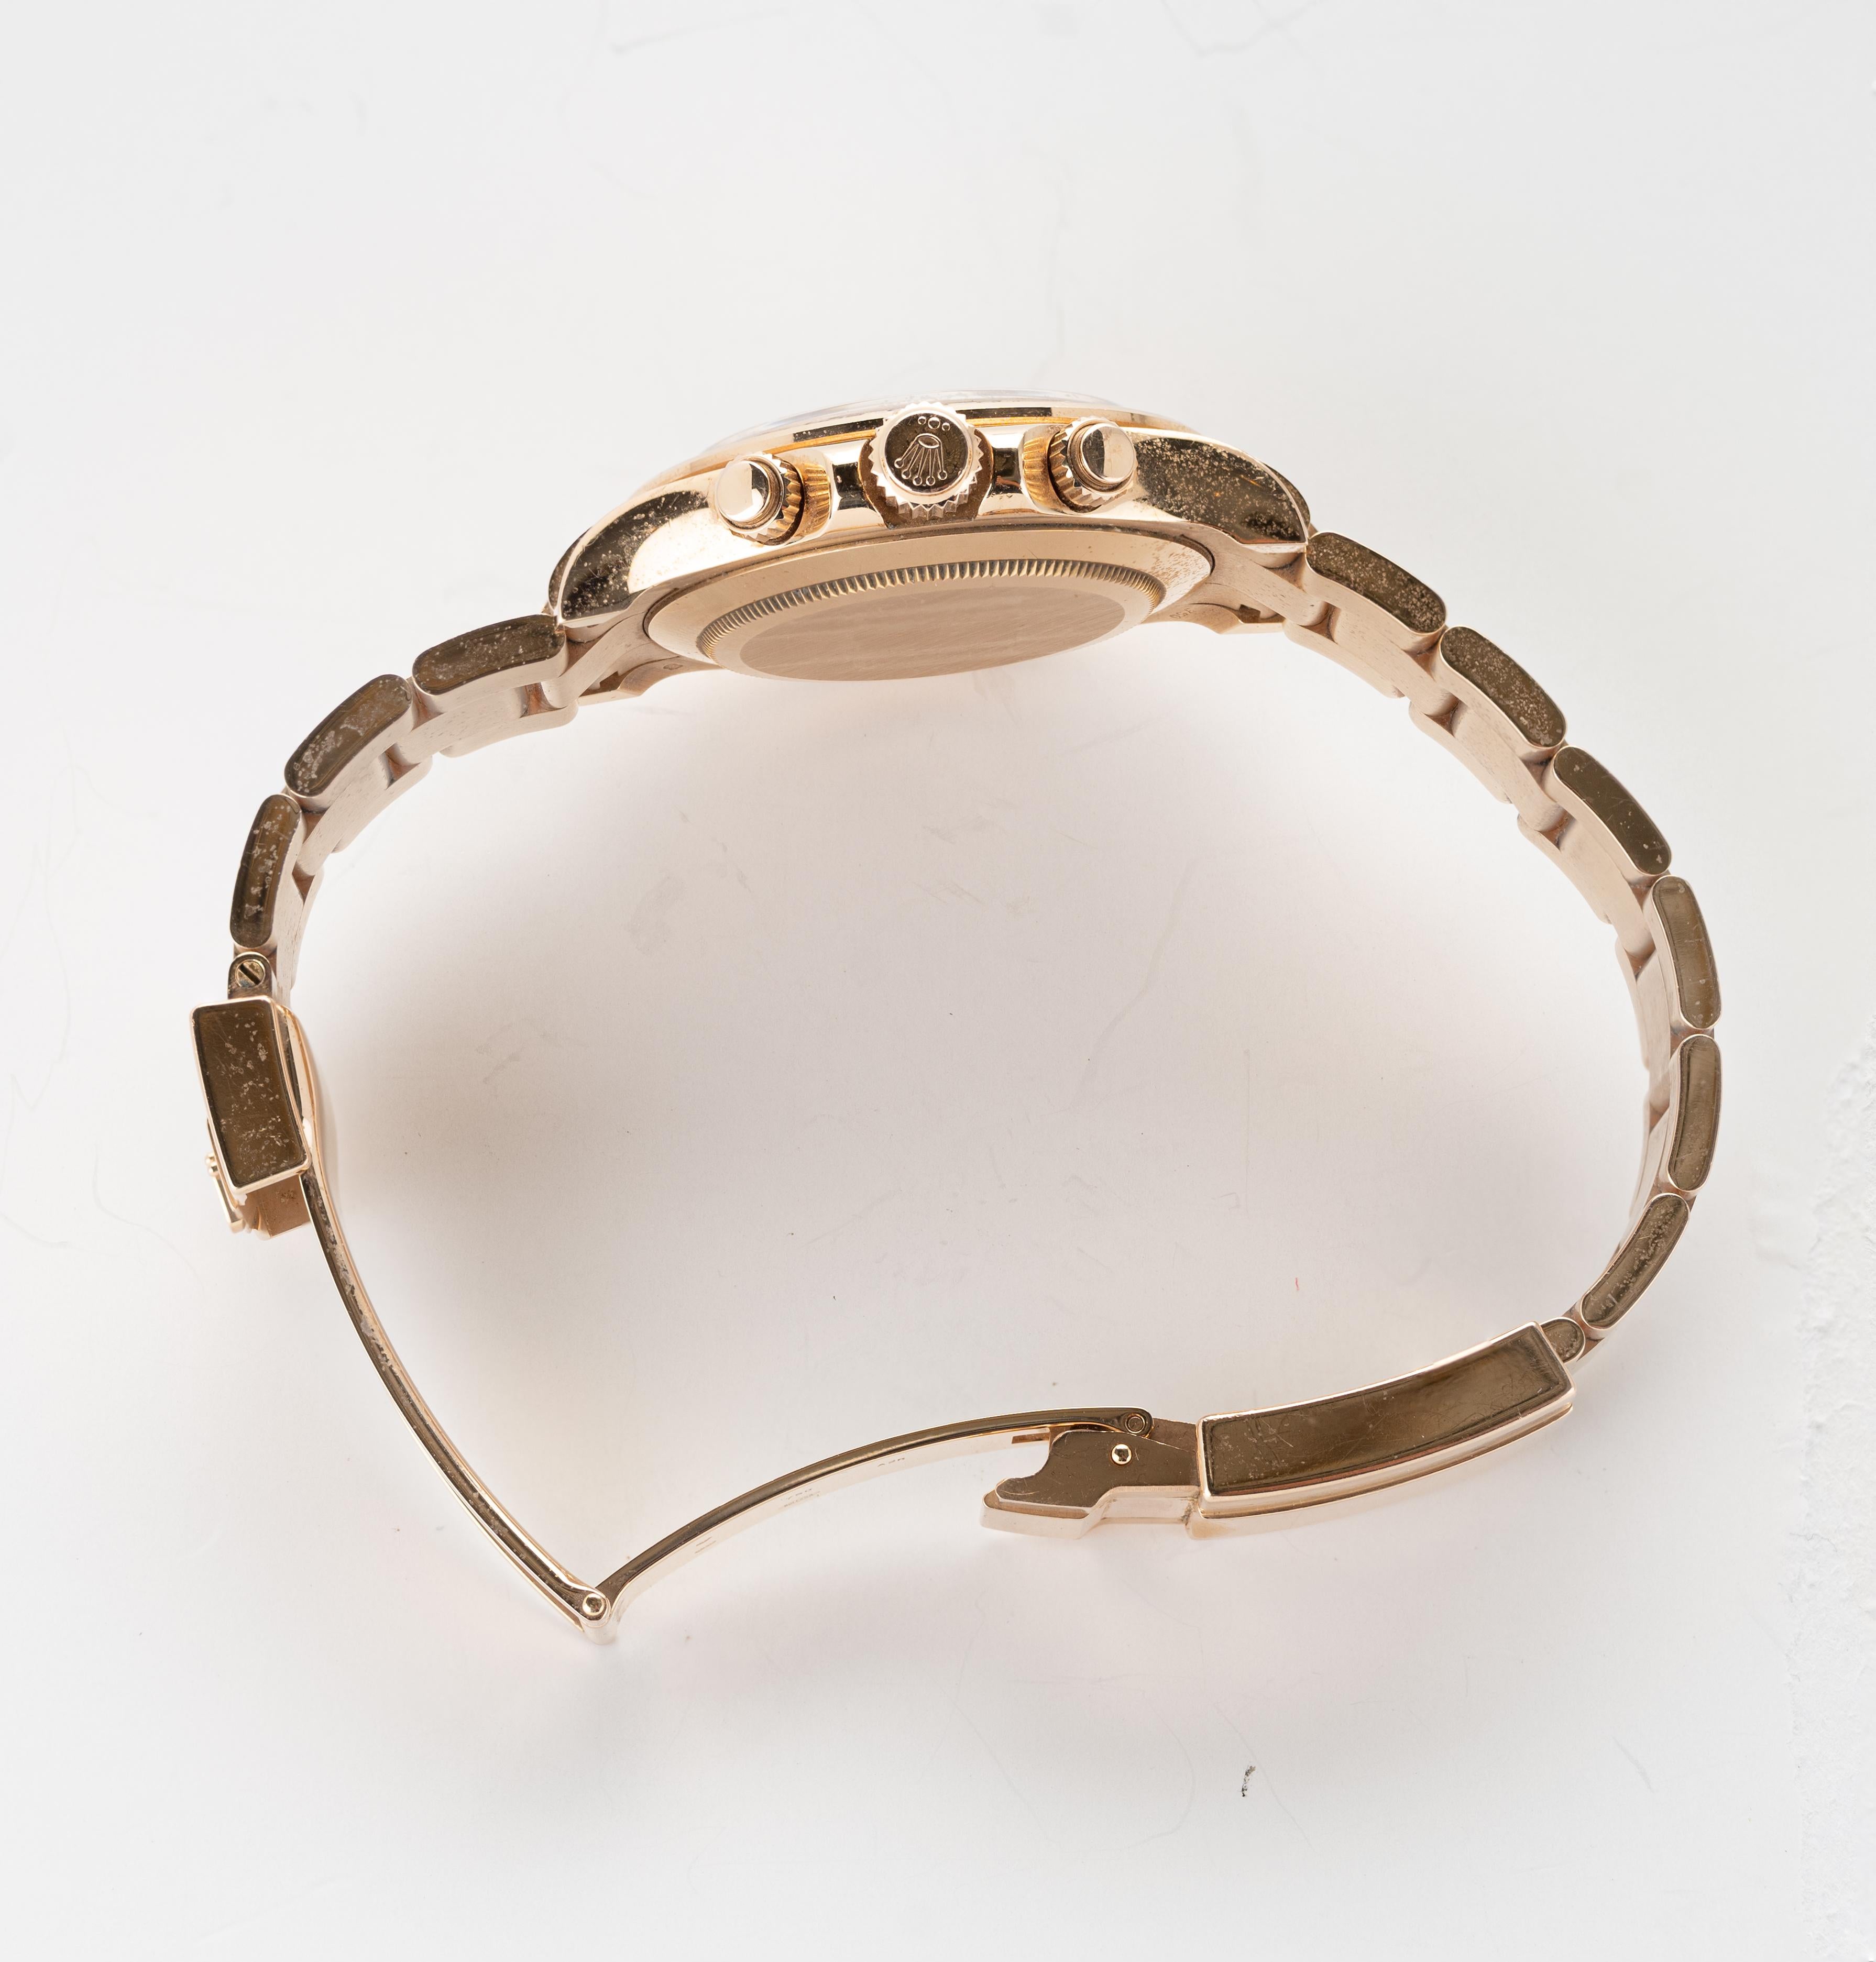 Rolex Daytona Bracelet Oyster Everose en or avec diamants roses et baguettes 116505 2